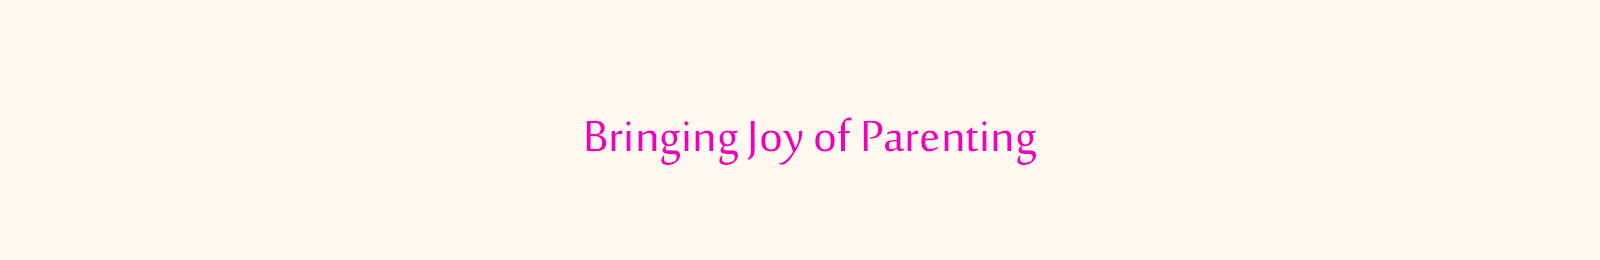 Methods of diagnosing infertility in Jayadeva Fertility Center